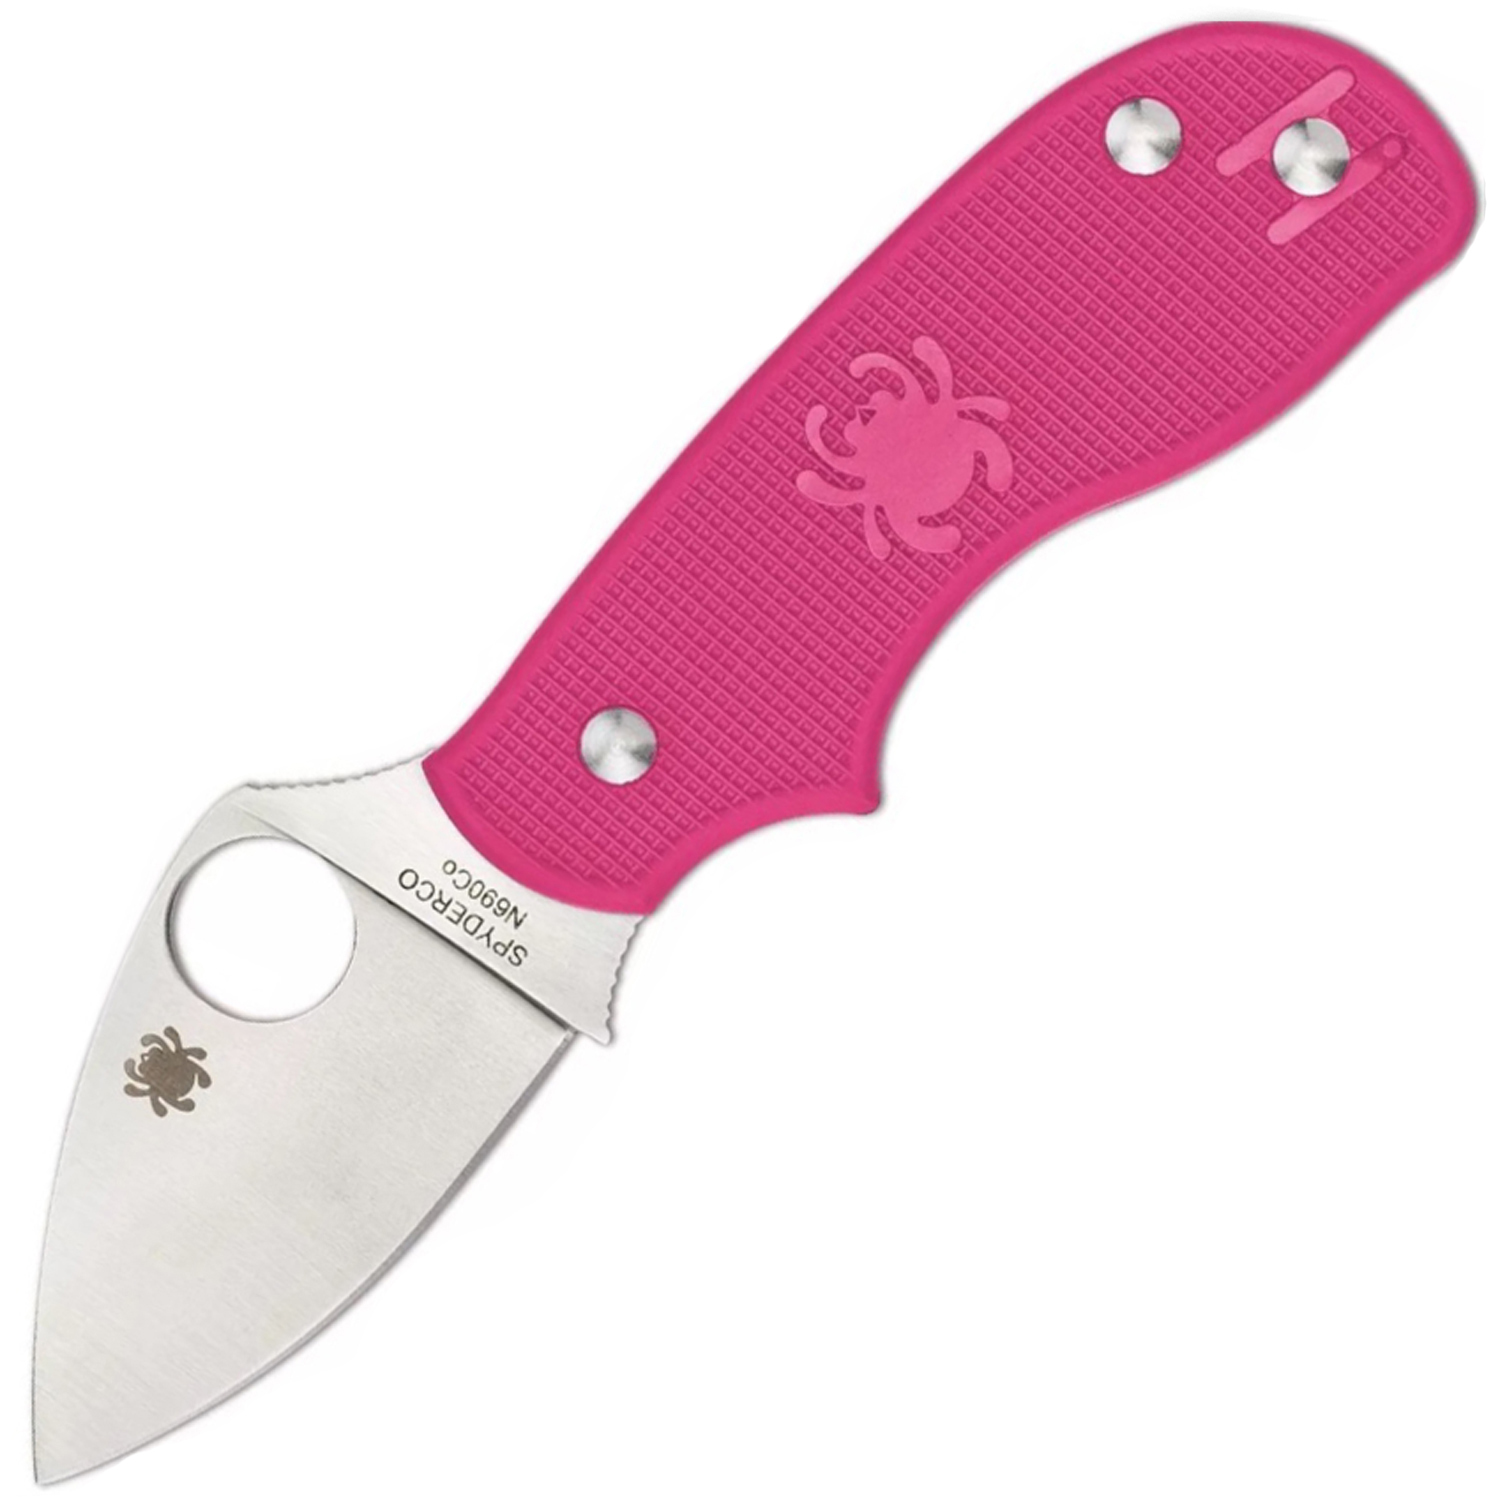 Нож складной Squeak Pink Spyderco 154PPN, сталь N690Co Satin Plain, рукоять термопластик FRN, розовый